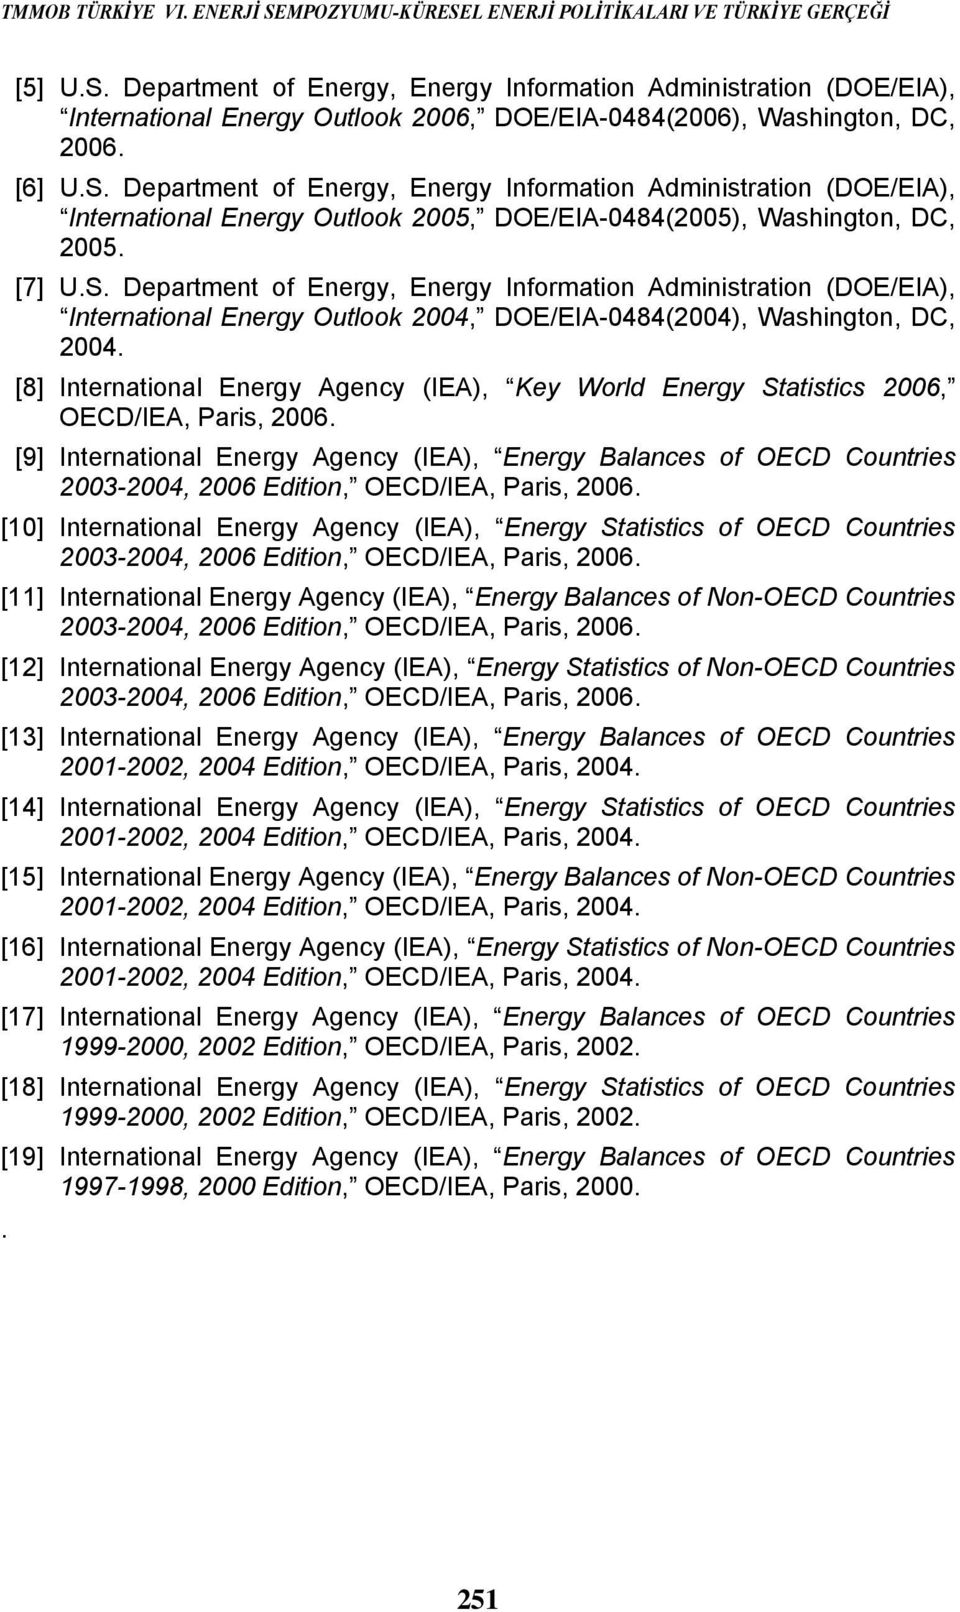 [8] International Energy Agency (IEA), Key World Energy Statistics 2006, OECD/IEA, Paris, 2006.